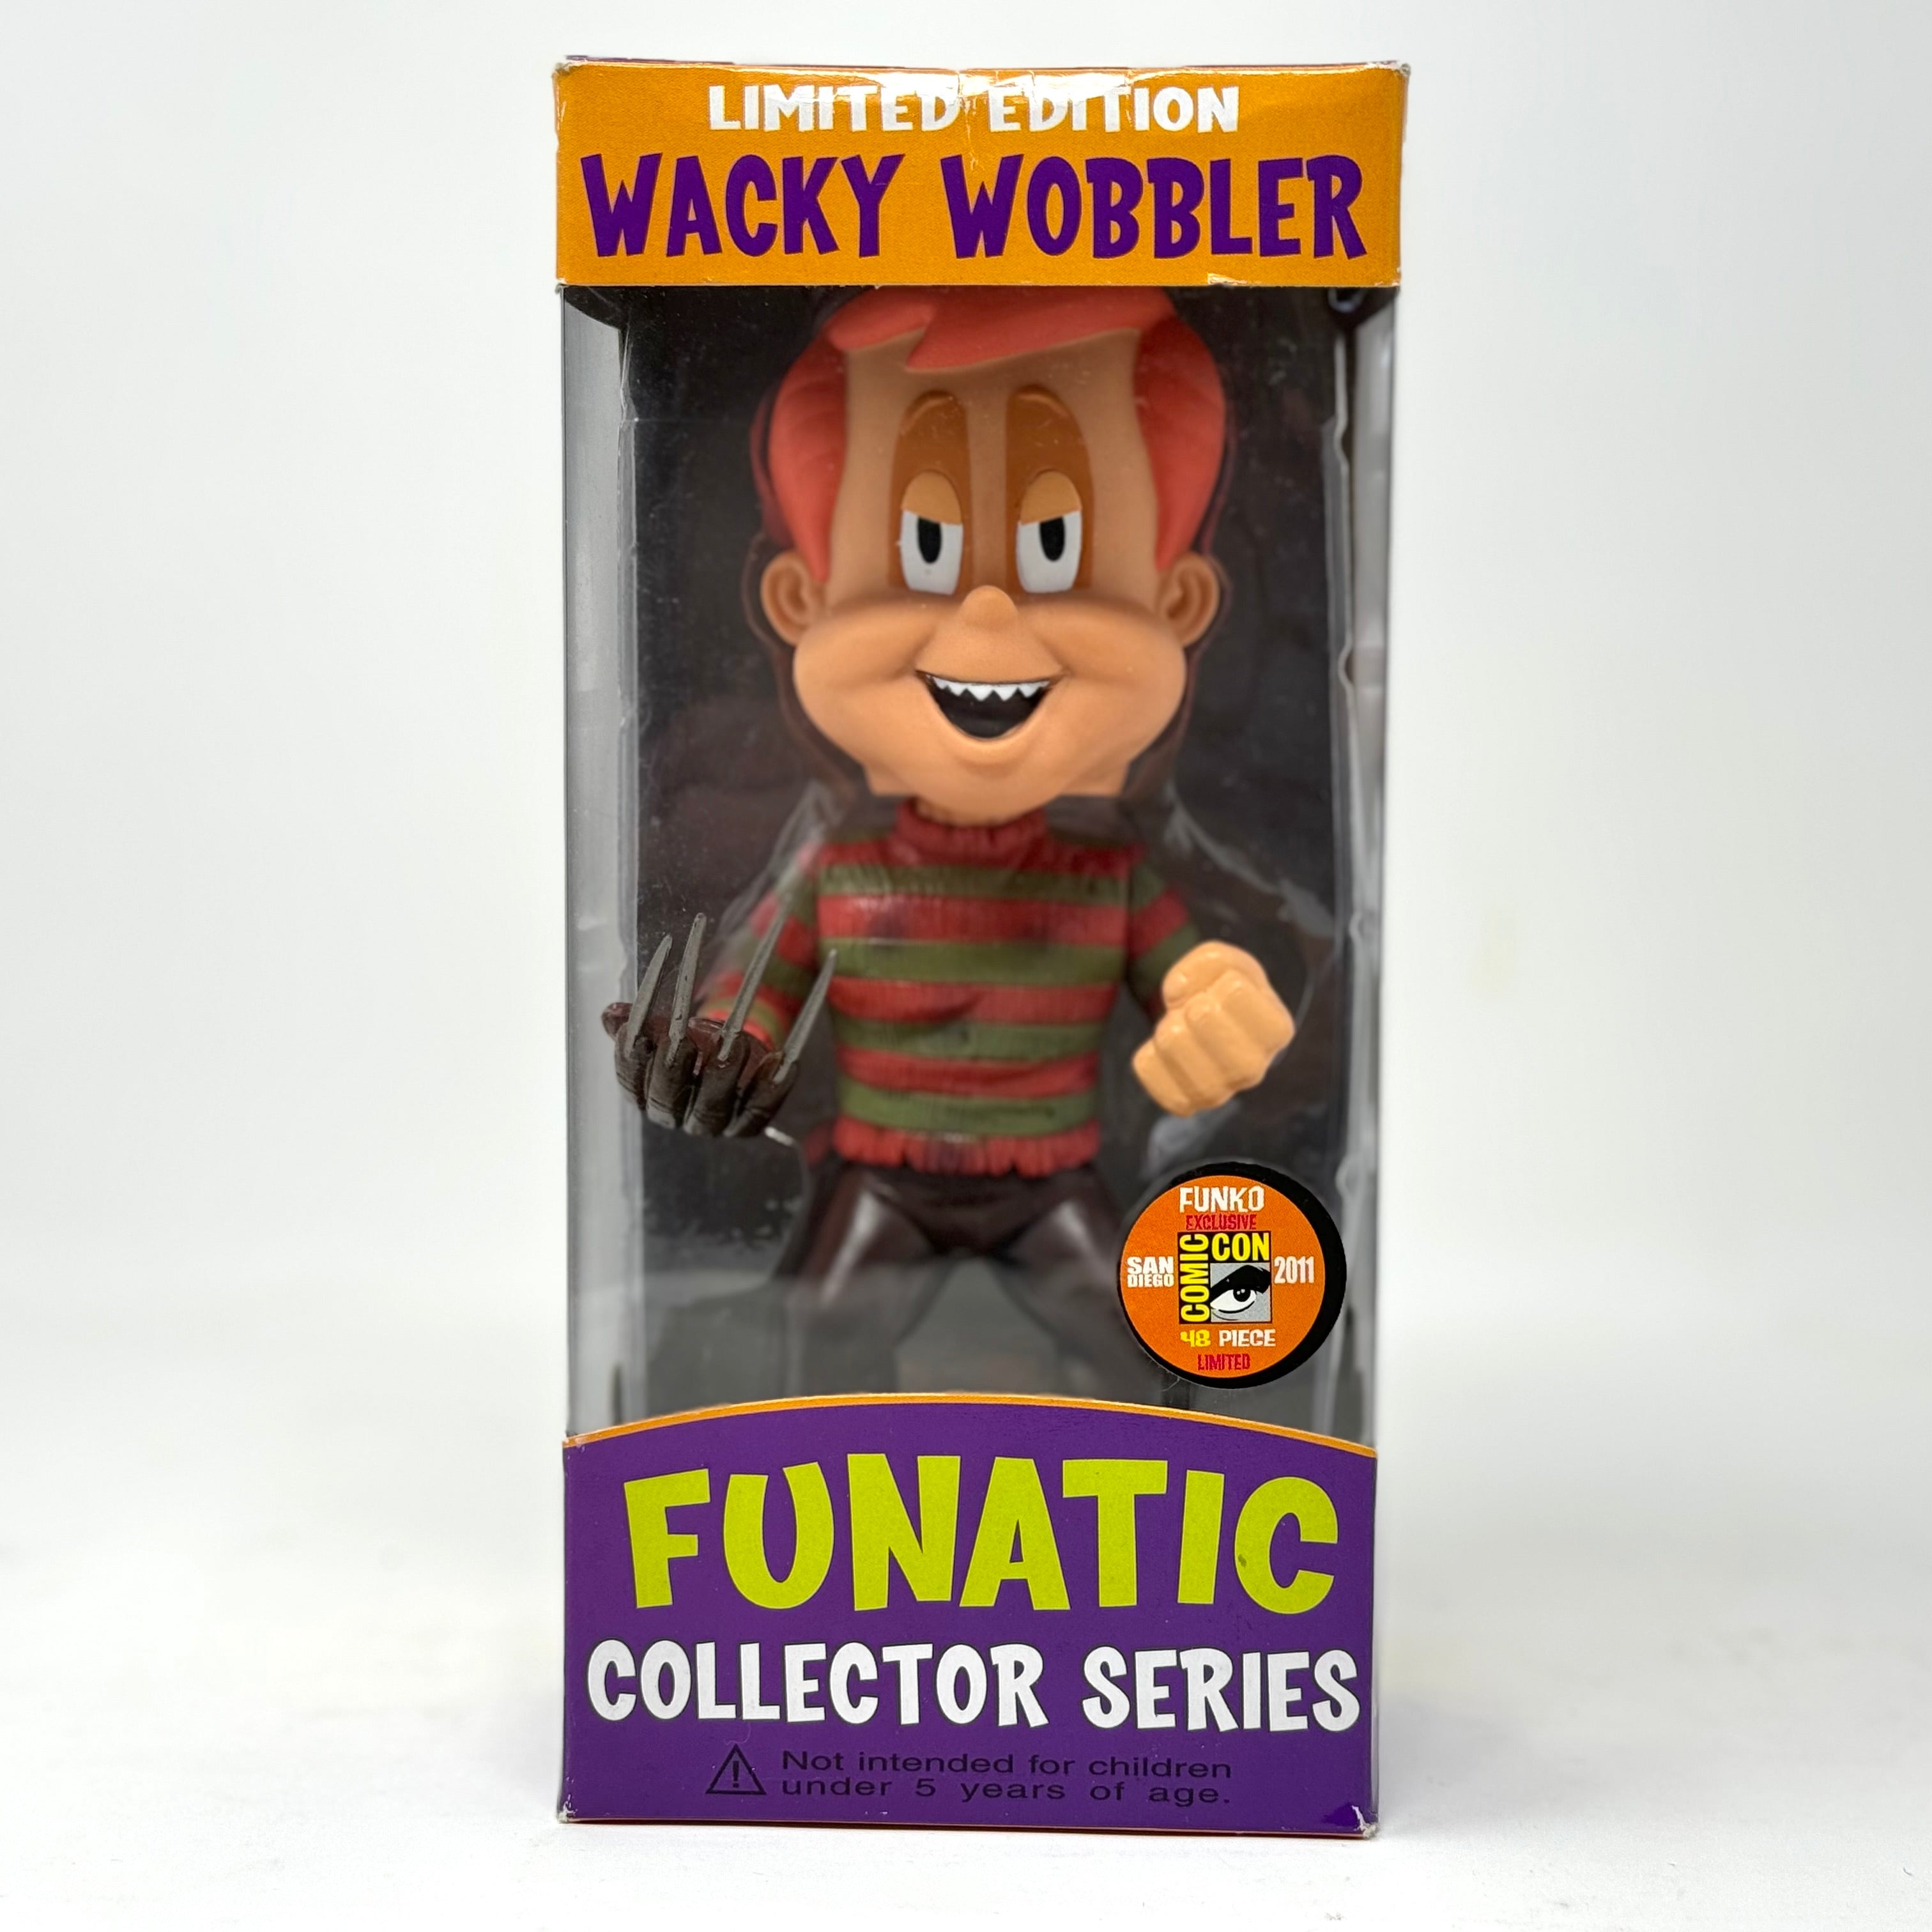 Freddy Funko As Freddy Krueger, Wacky Wobbler, 2011 SDCC, Funatic Collector  Series, (Condition 7/10)